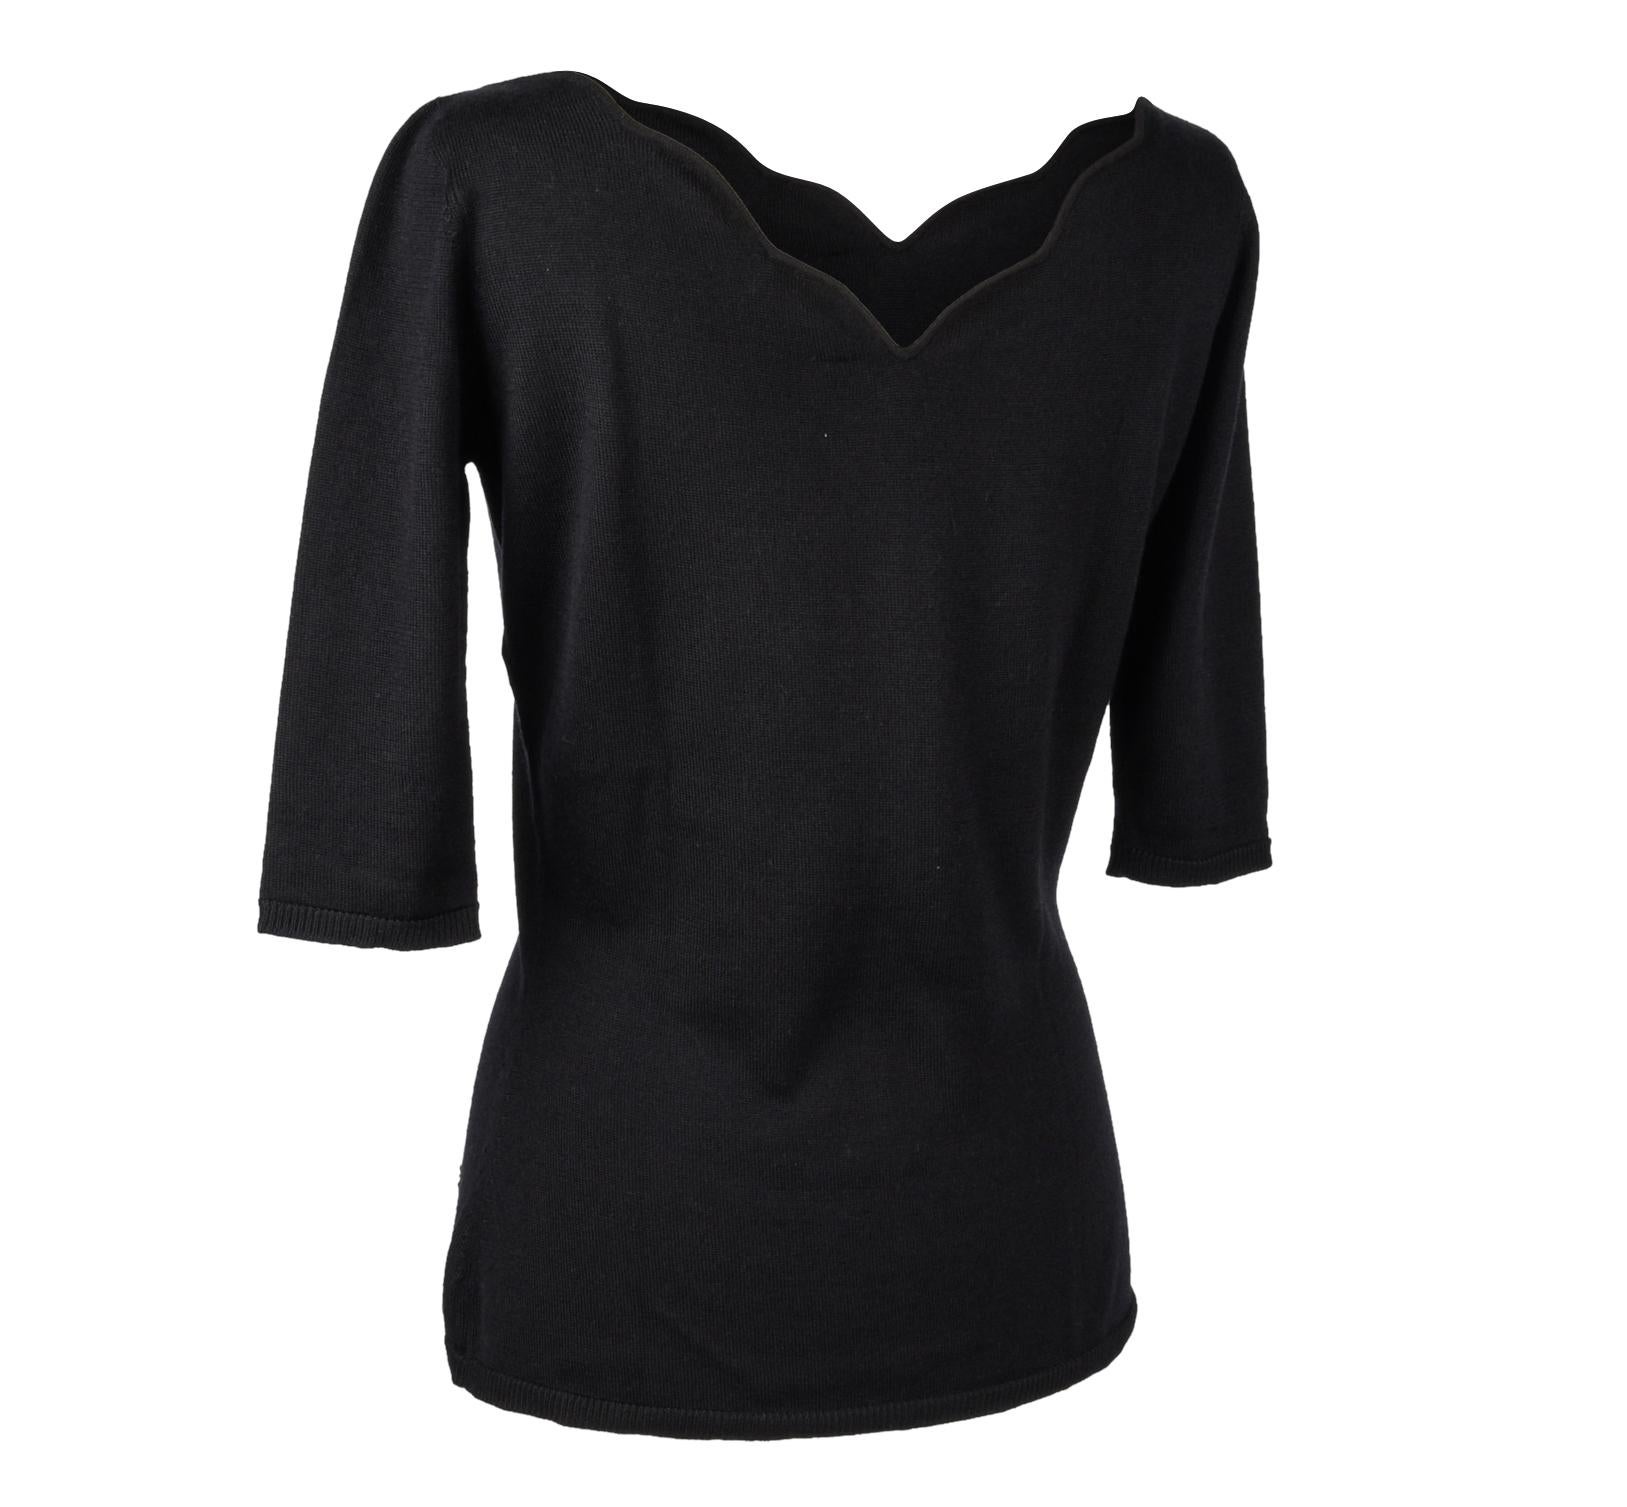 Christian Dior Top Black Cashmere Pullover Scallop Neckline 3/4 Sleeve 2